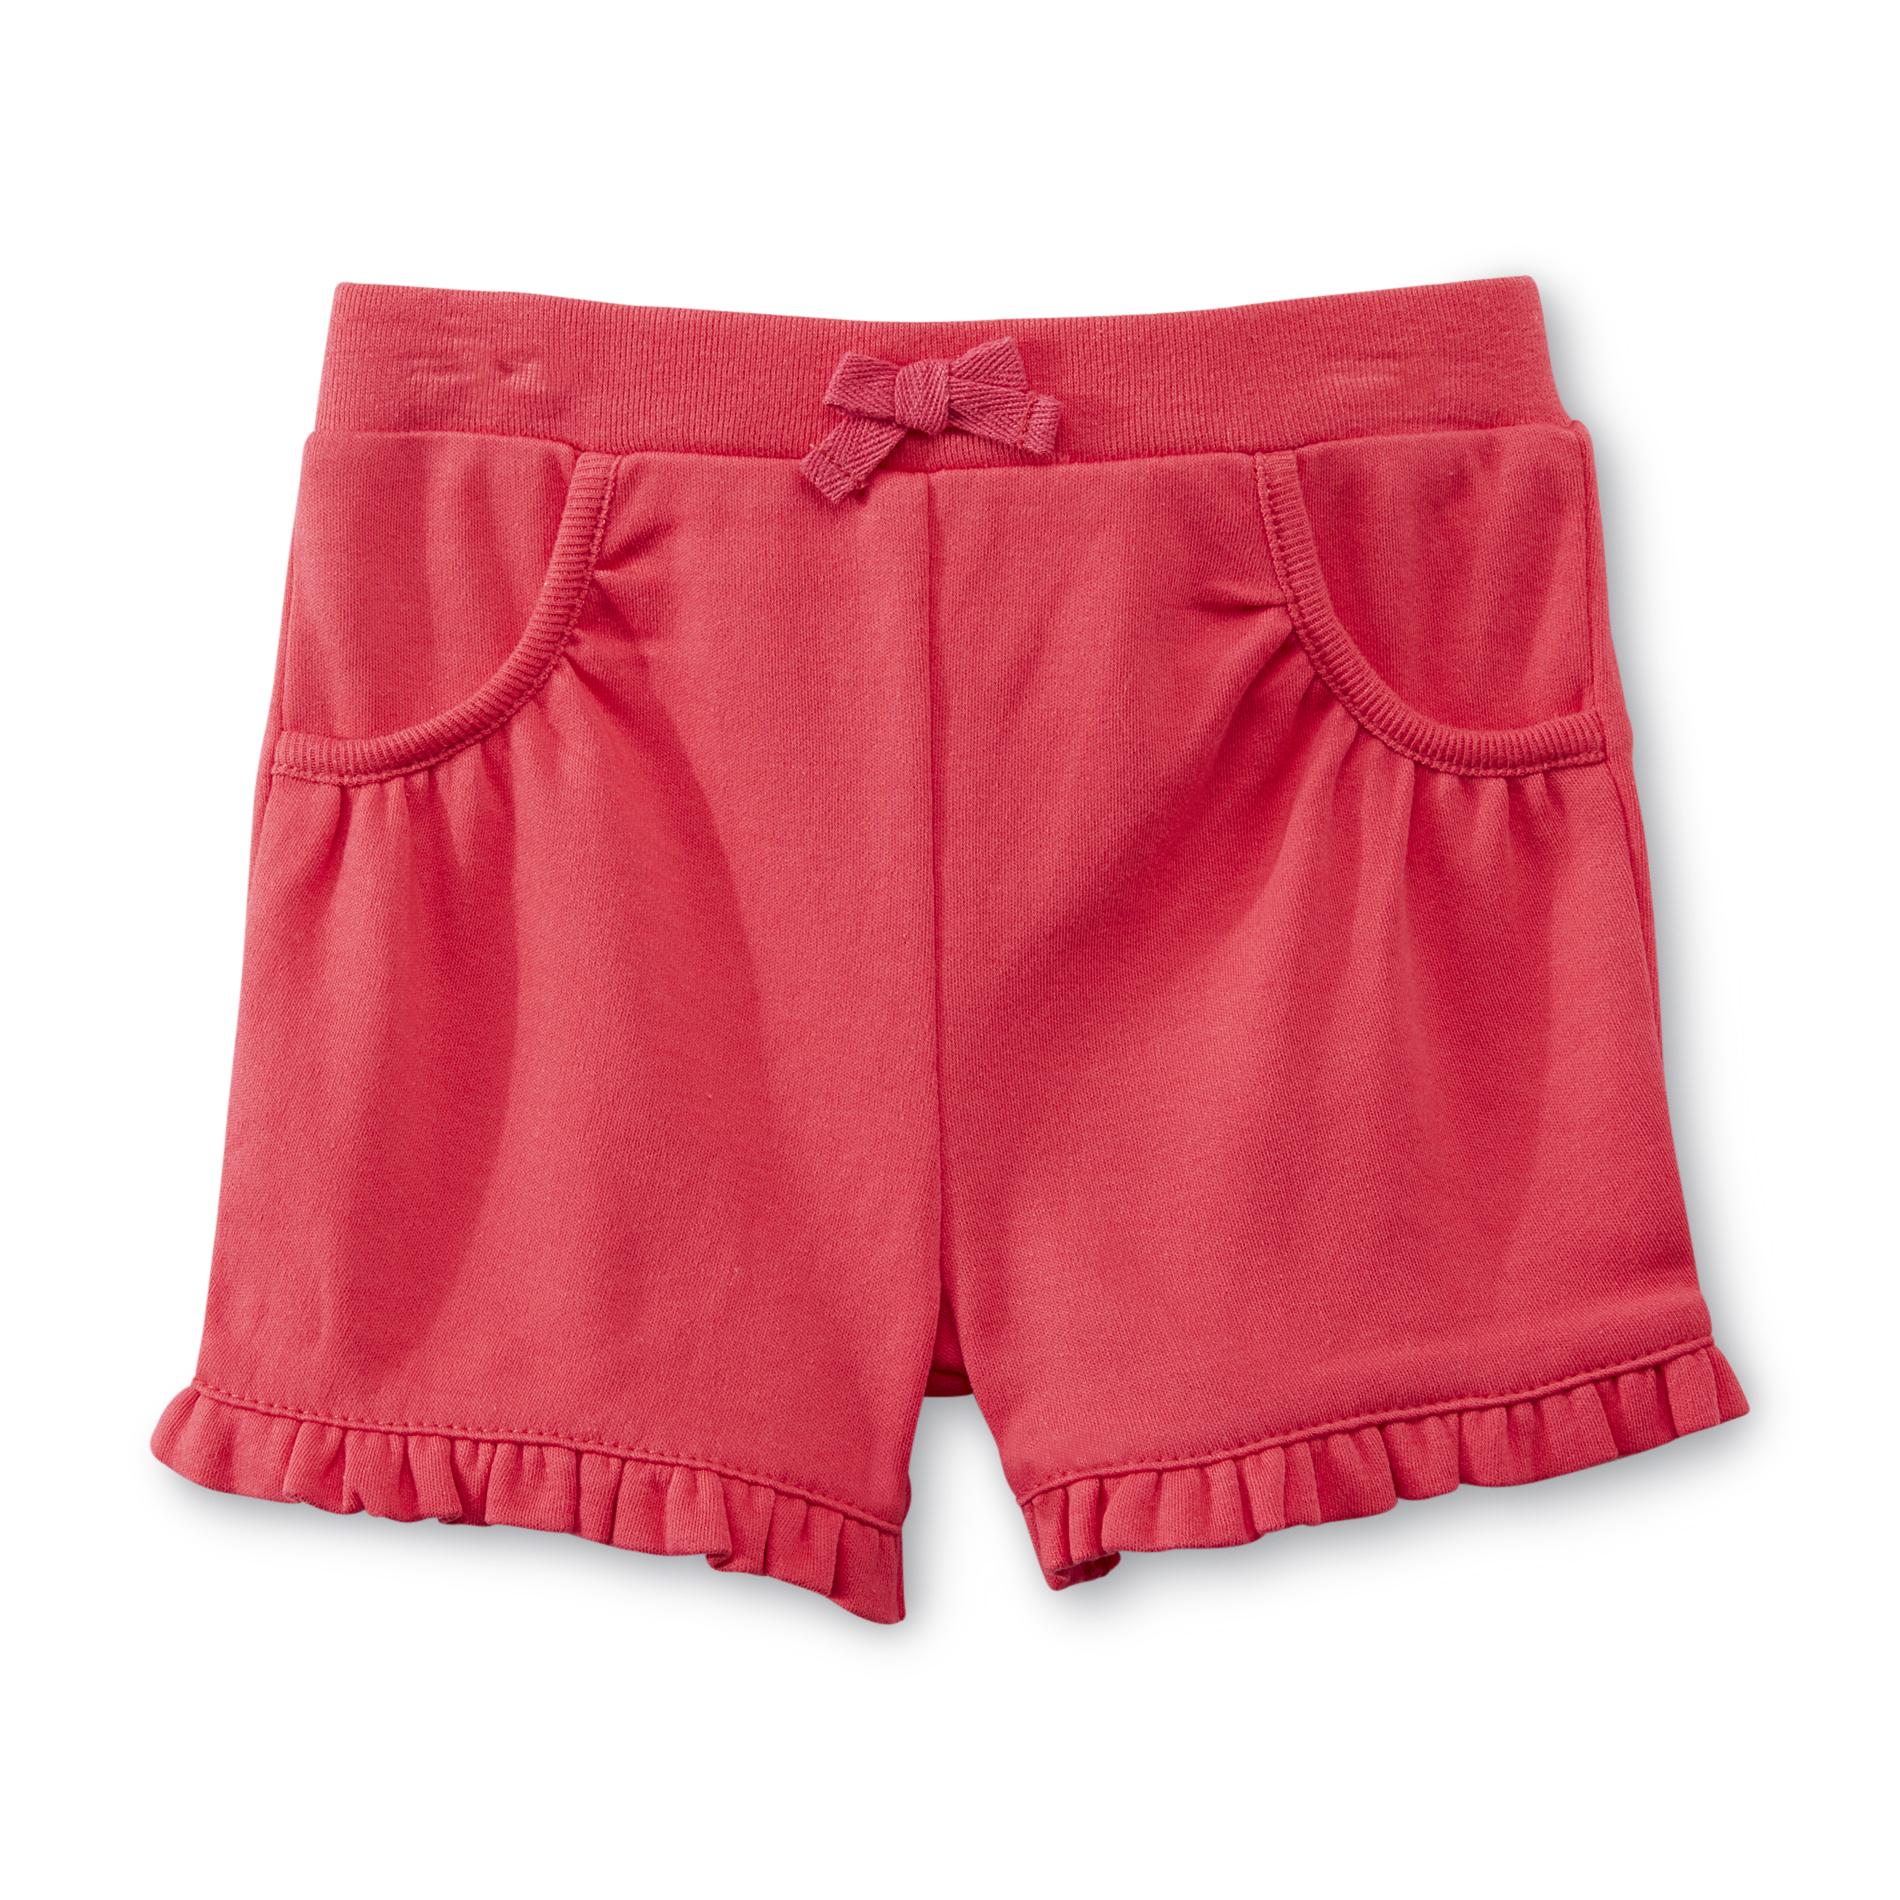 Little Wonders Newborn & Infant Girl's Knit Shorts